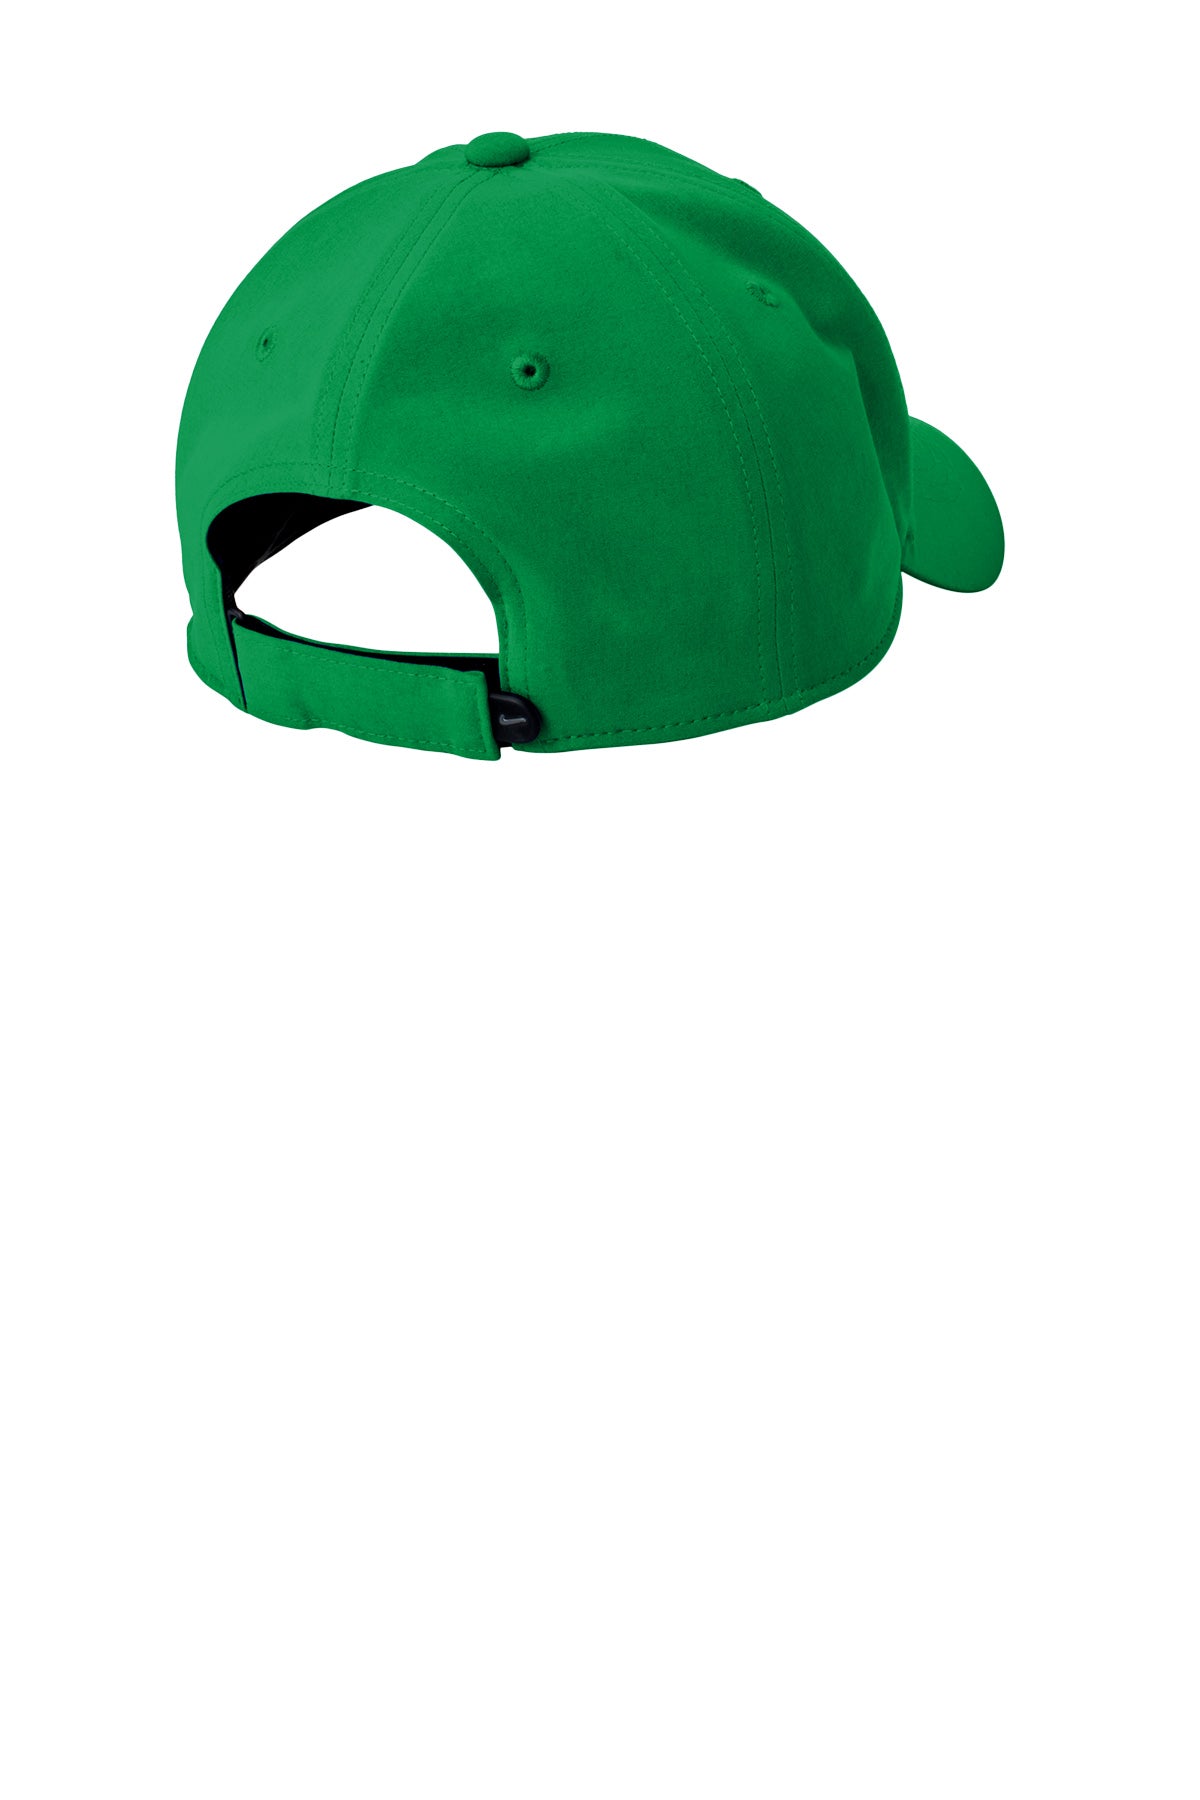 Nike Dri-FIT Legacy Cap - Apple Green